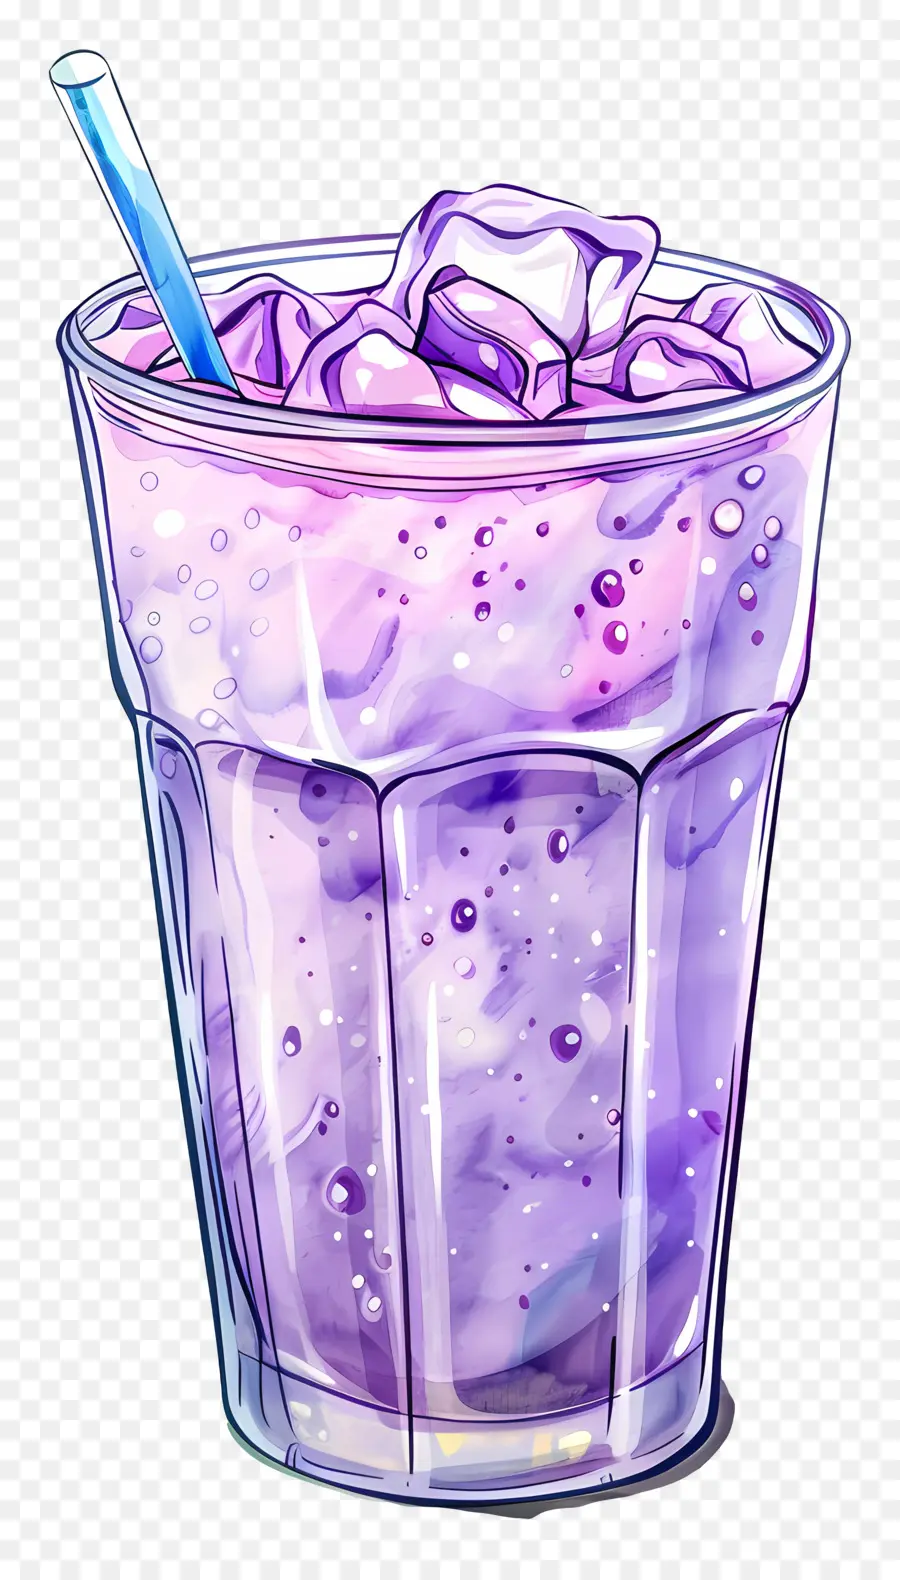 solkadhi drink drink lemonade glass ice cubes